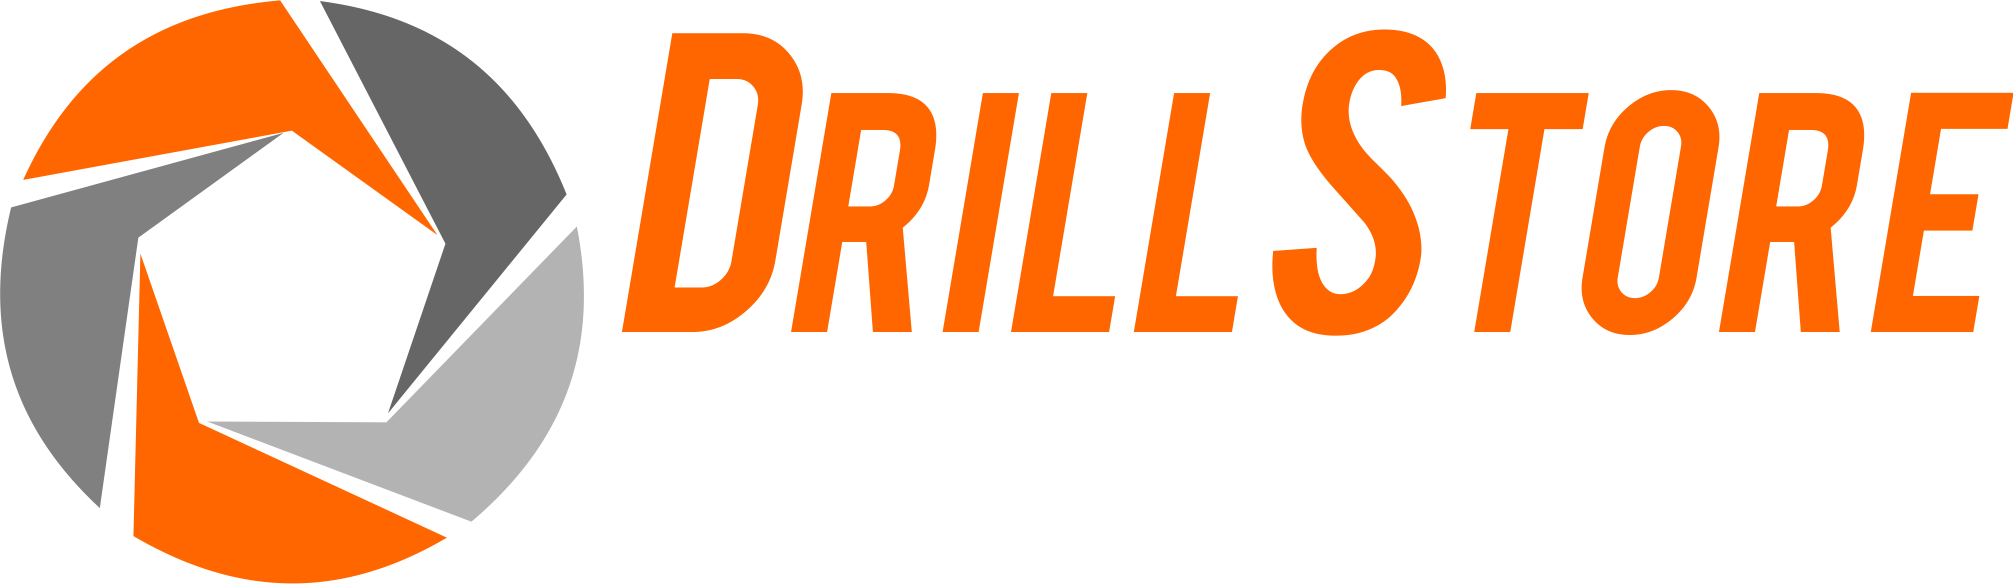 Drill Store Europe - authorized distributor for Hayden Diamond Bit Industries Ltd